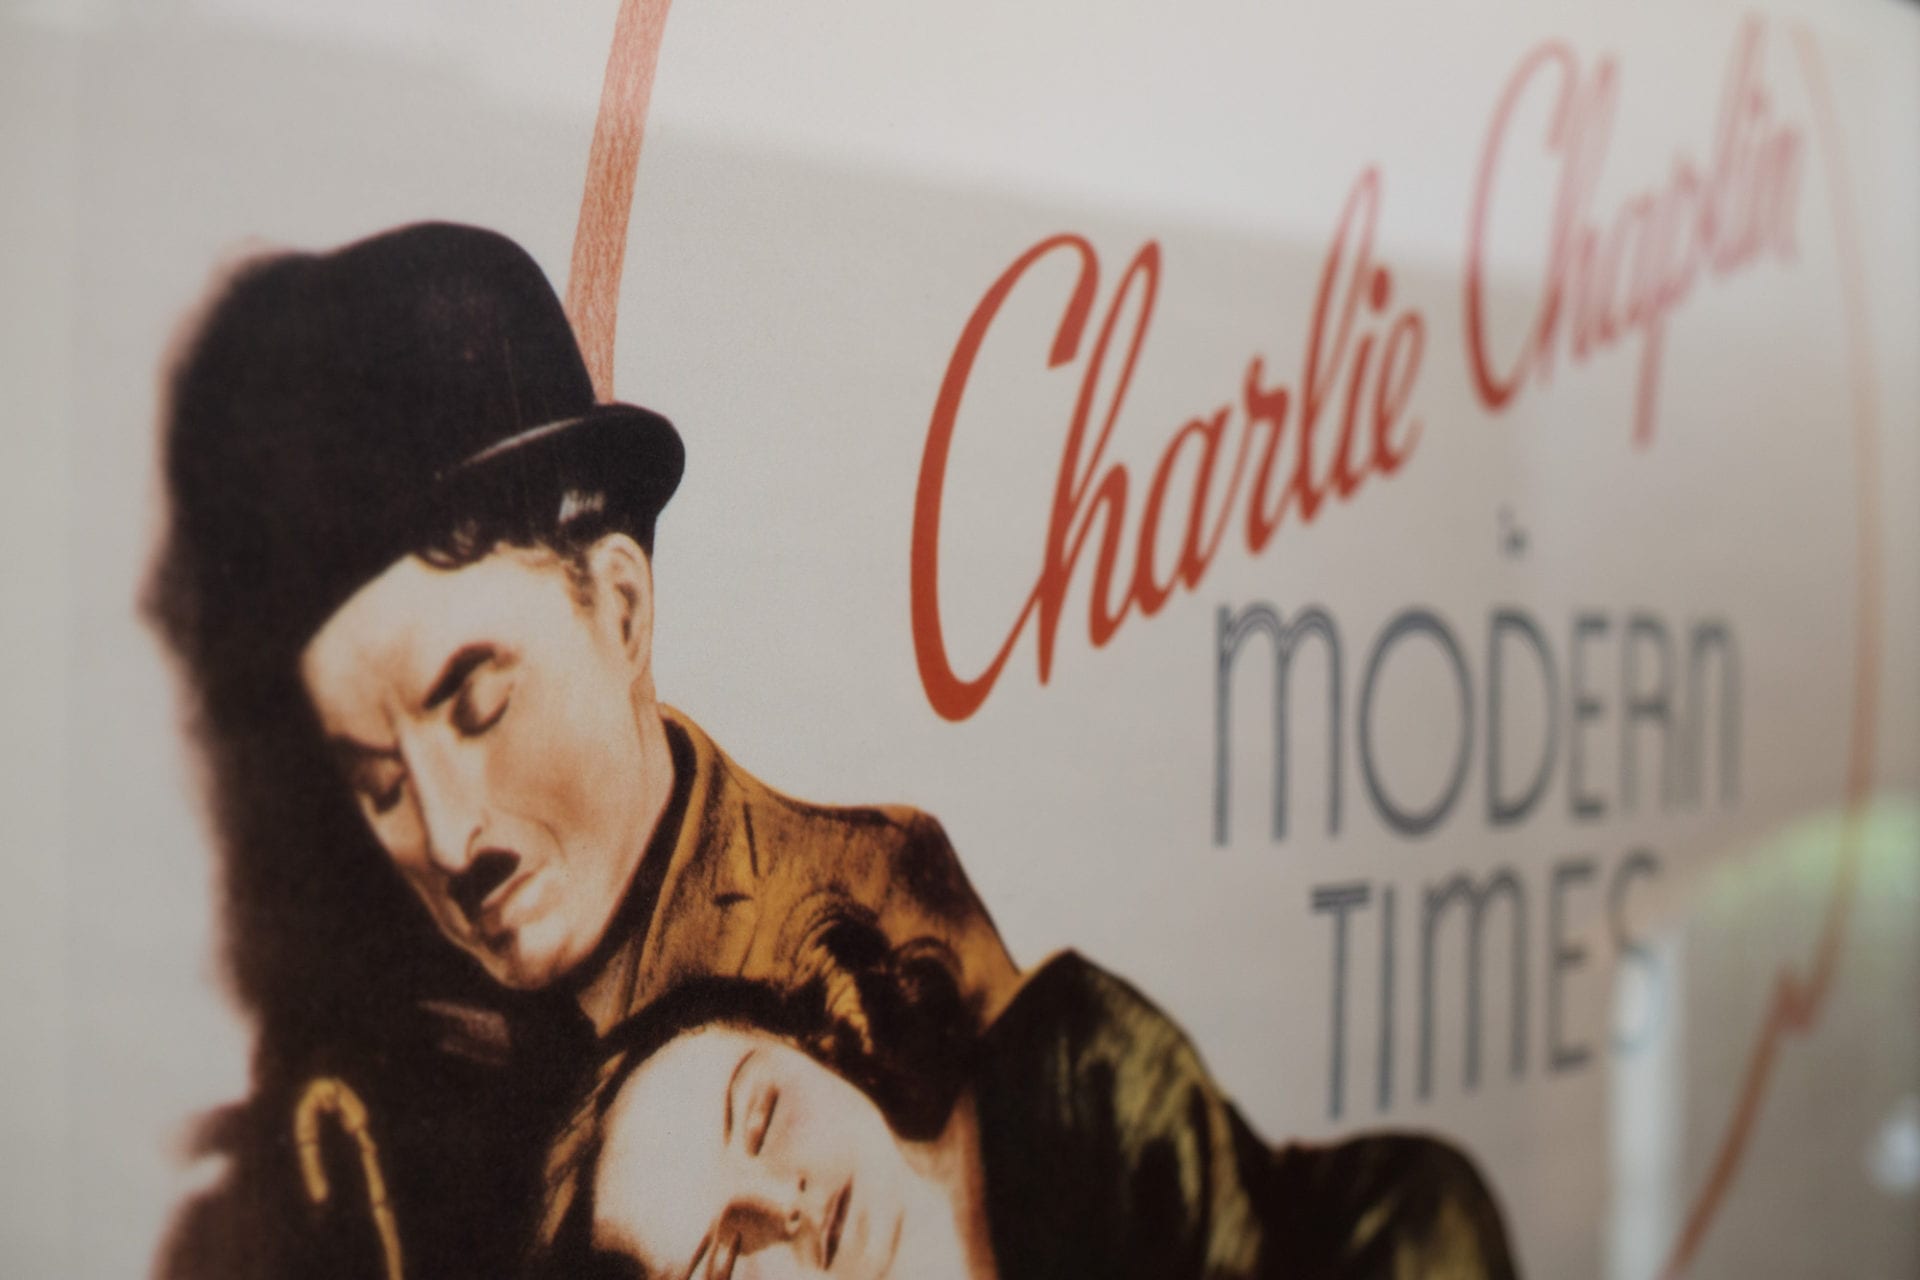 Charlie Chaplin Modern Times